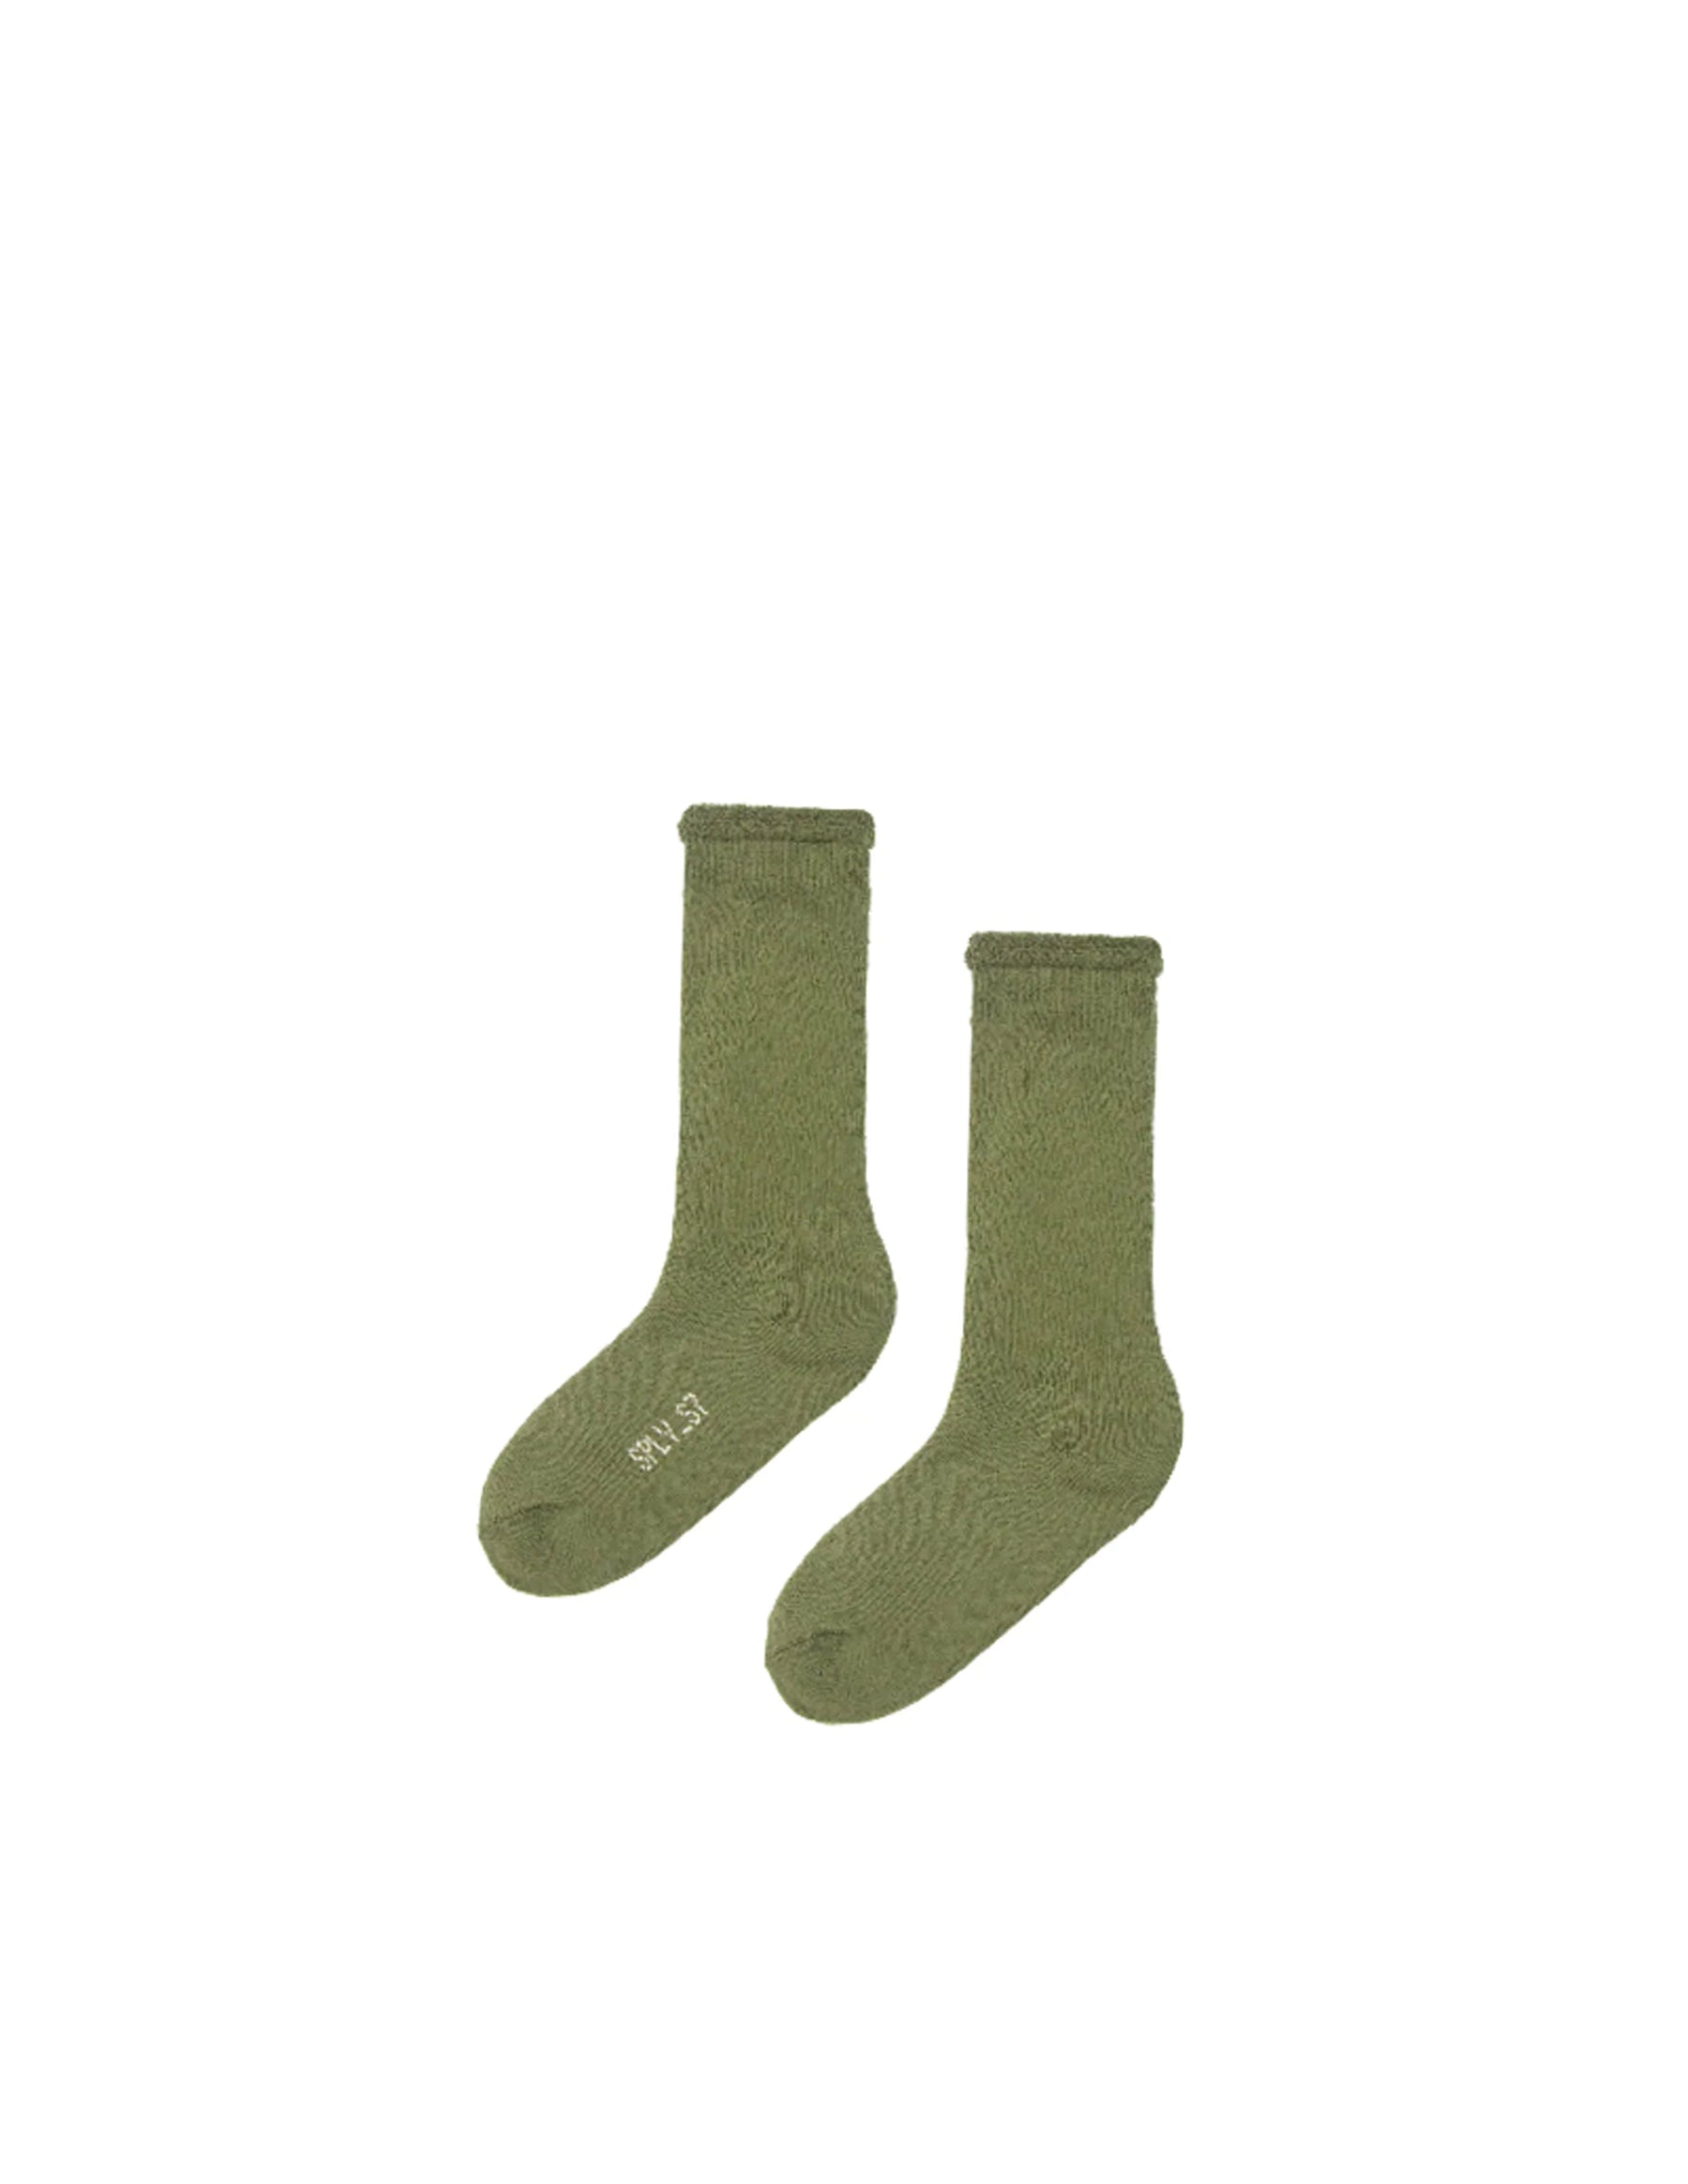 Yeezy Socks Season 7 "Green"